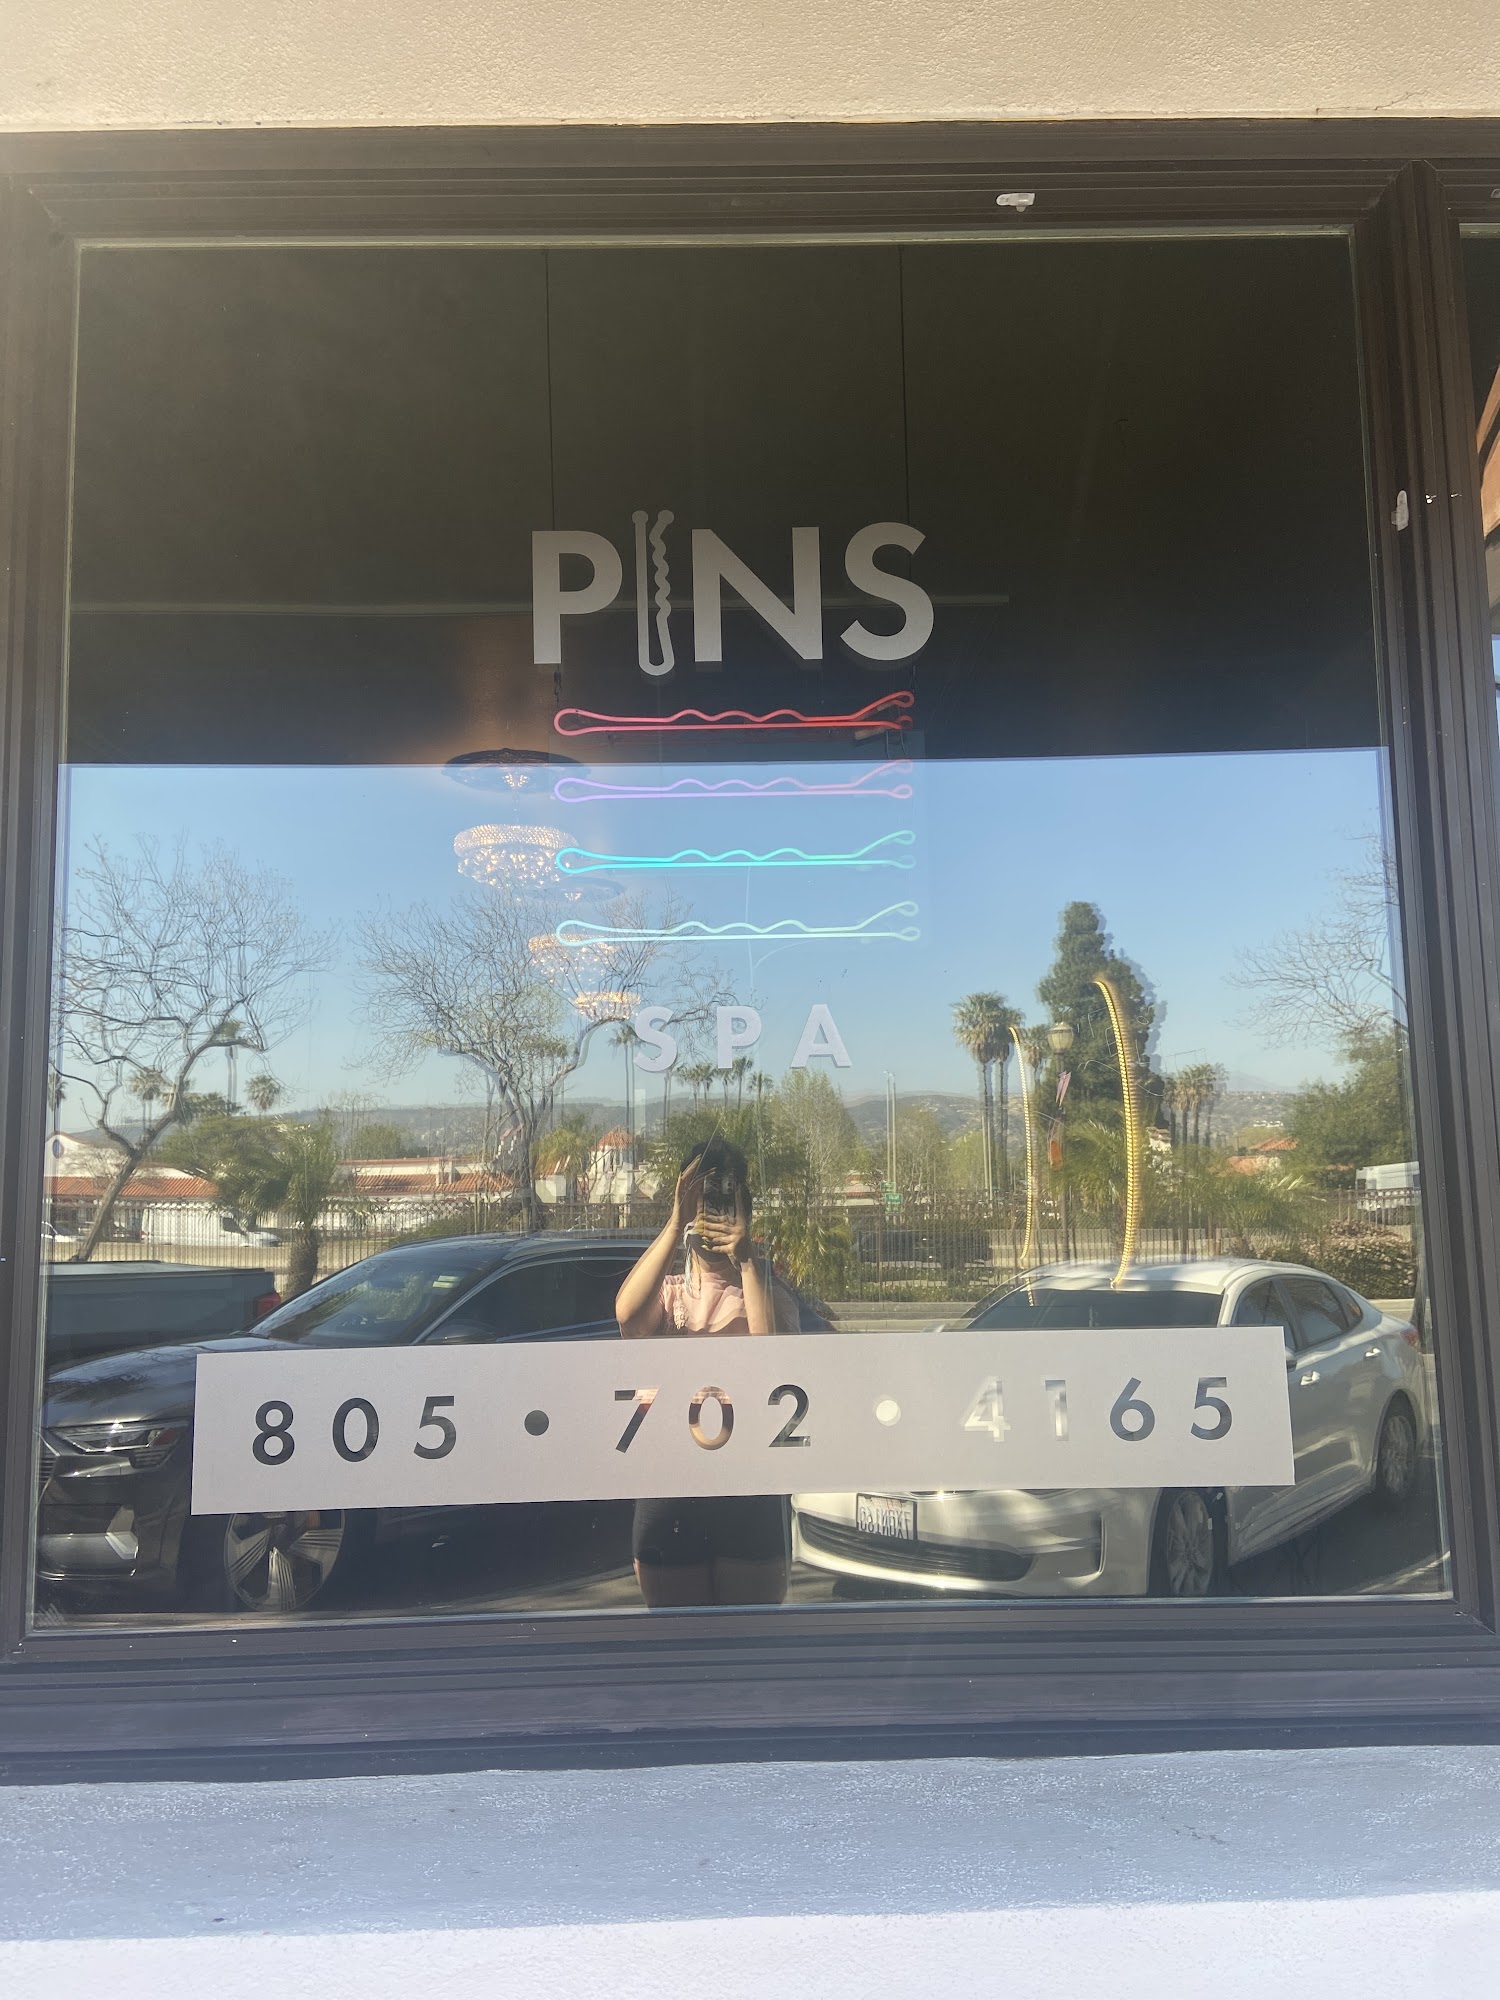 Pins Salon